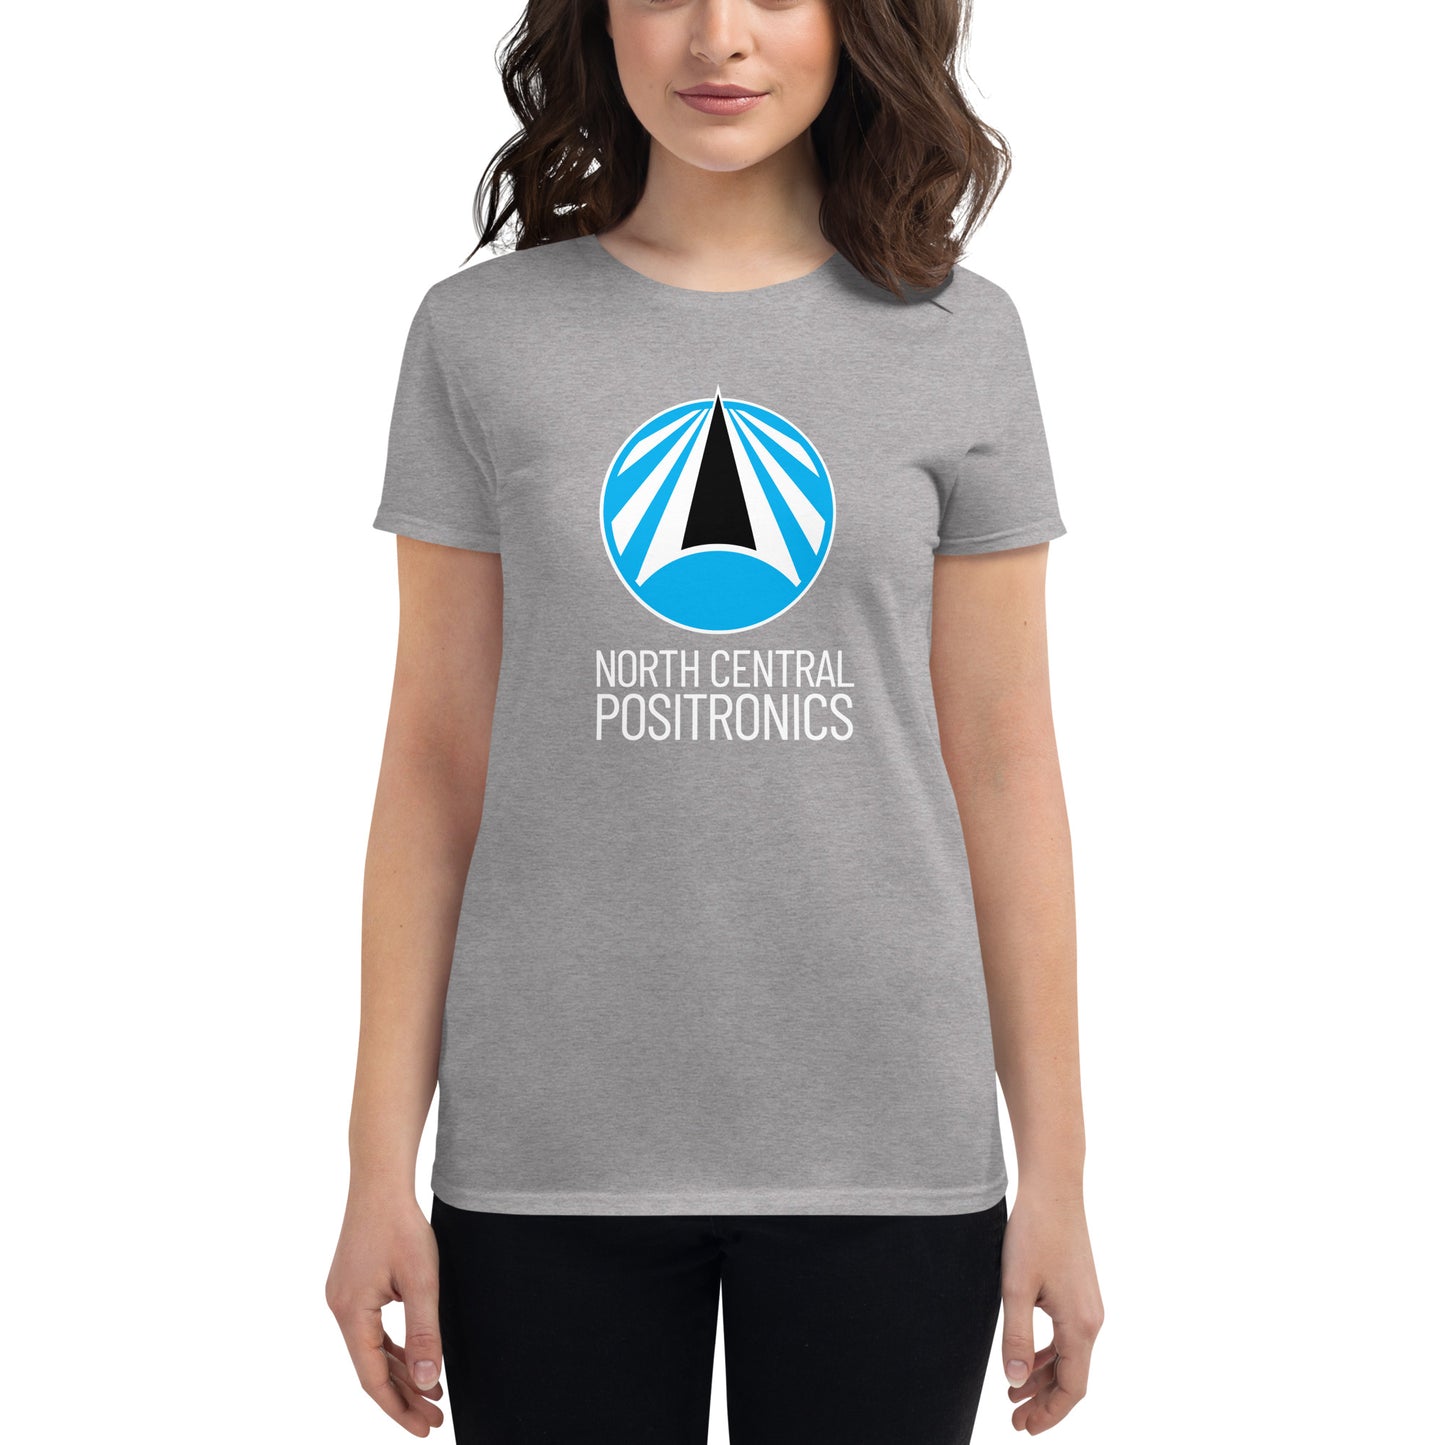 North Central Positronics T-Shirt, White Logo, Women's Fit